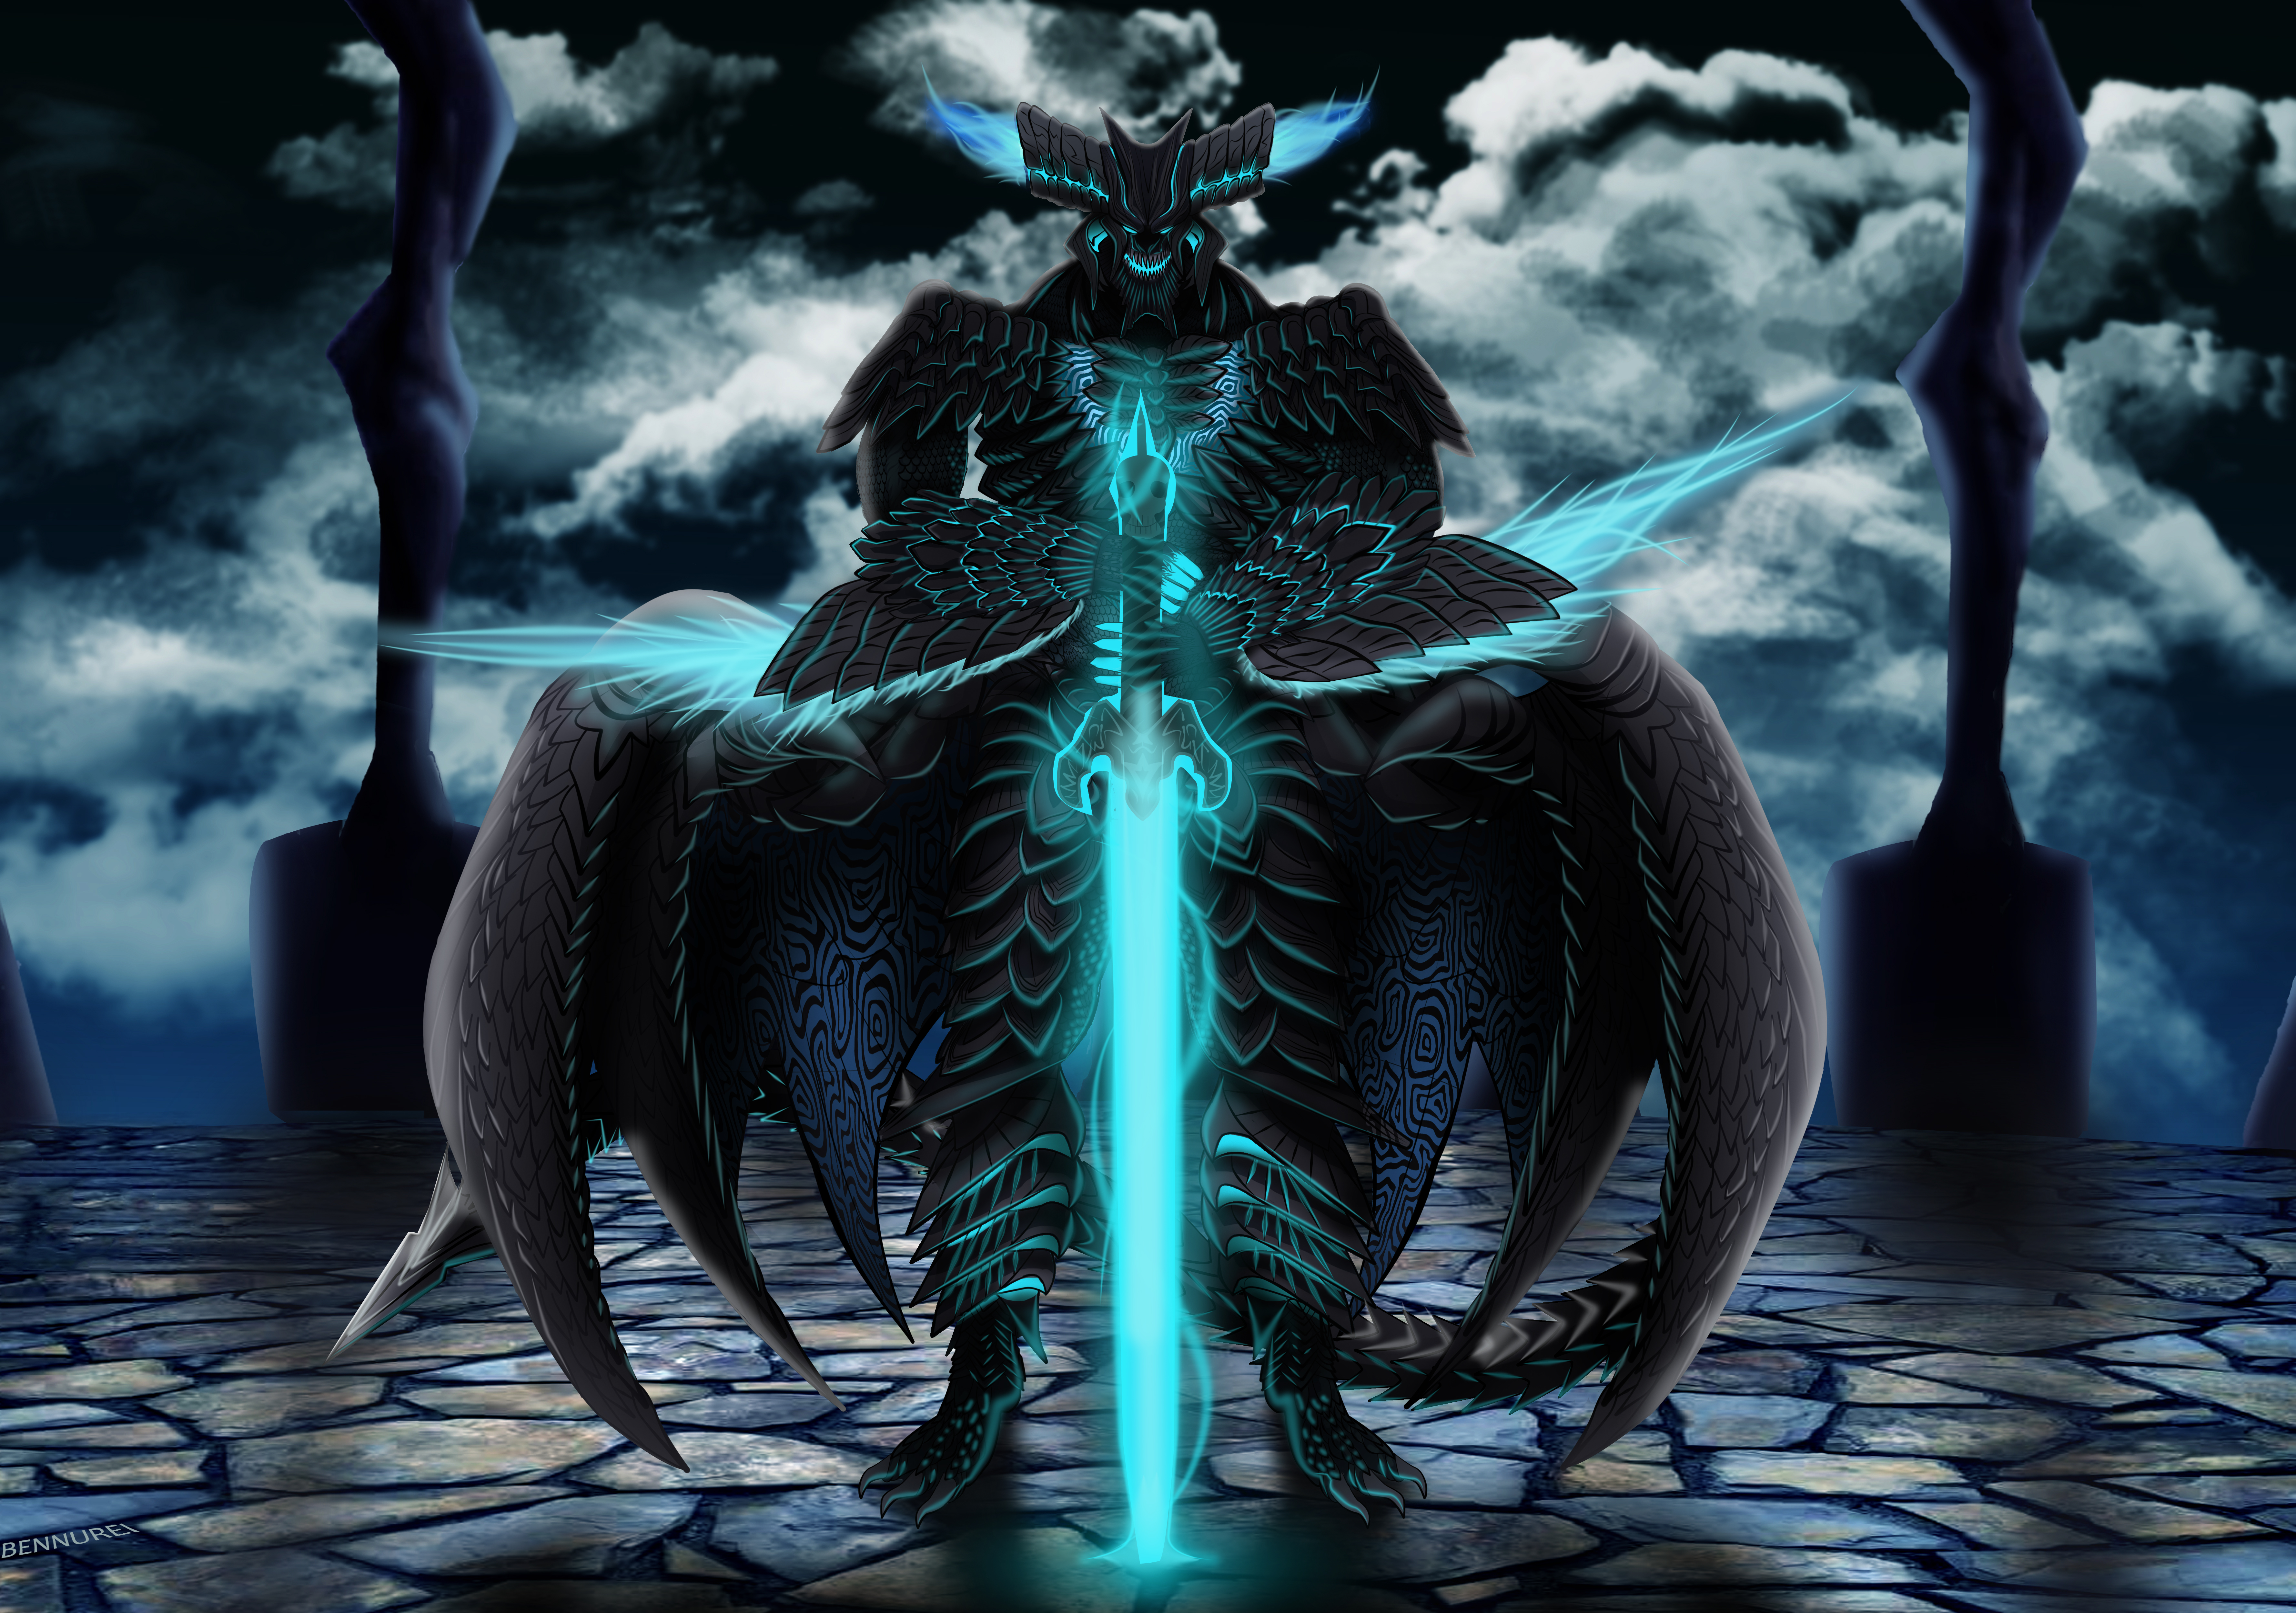 Vergil Devil Trigger Devil May Cry 5 by Nomada-Warrior on DeviantArt